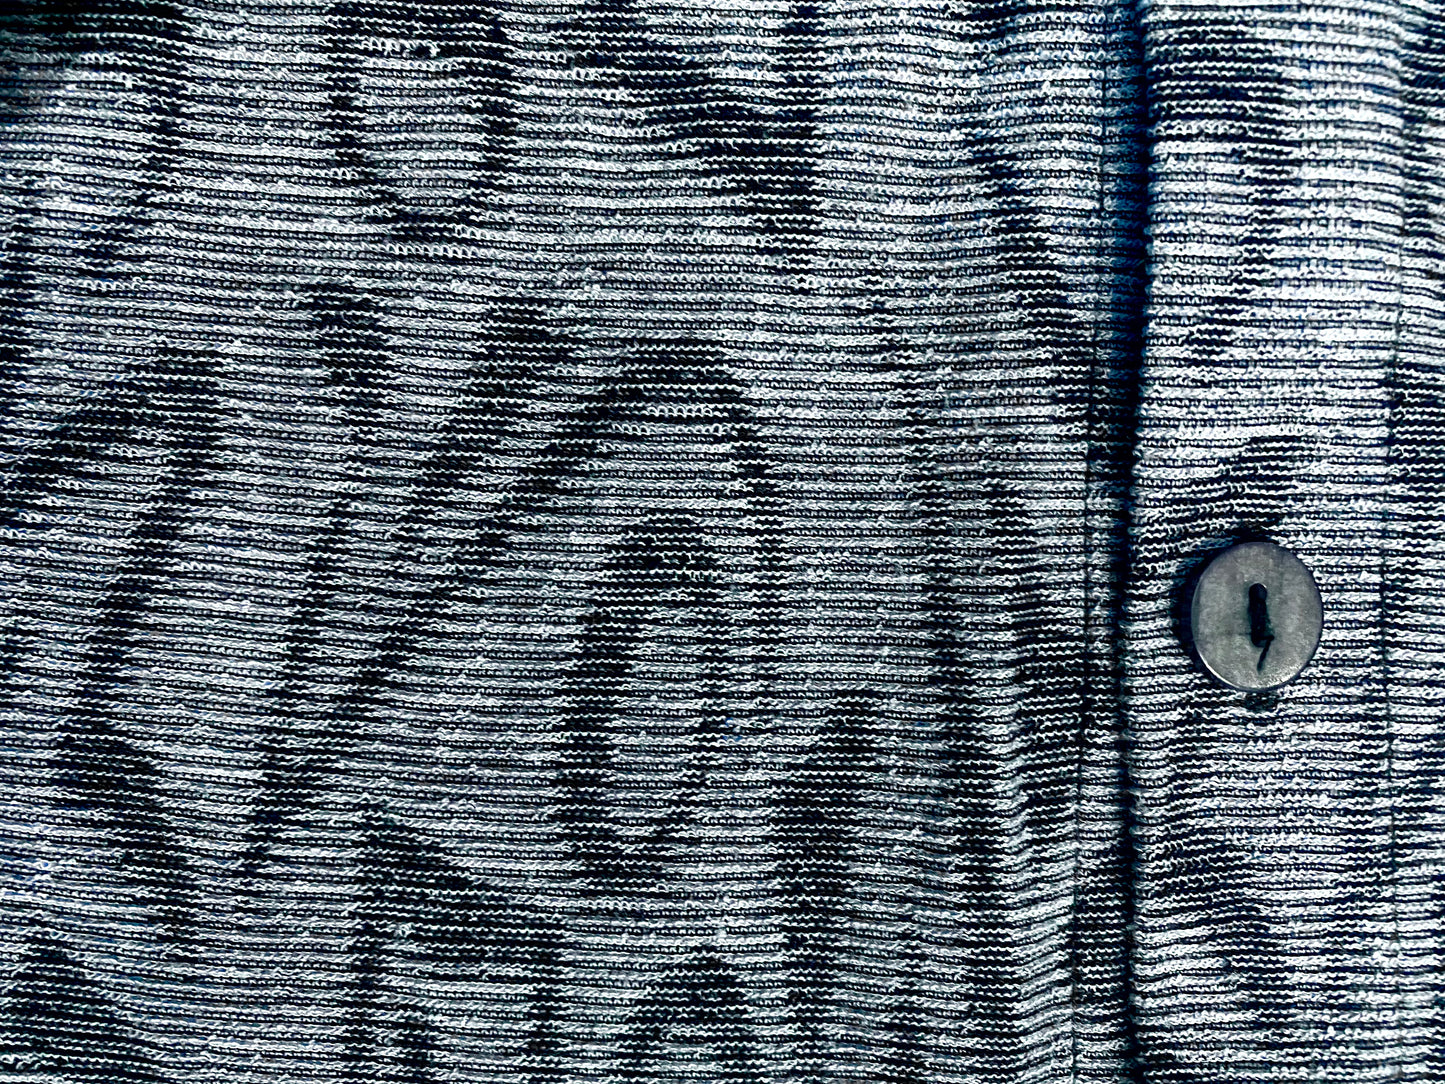 1990 Avi Blue abstract graffiti allover rib knit viscose shirt, oversized fit